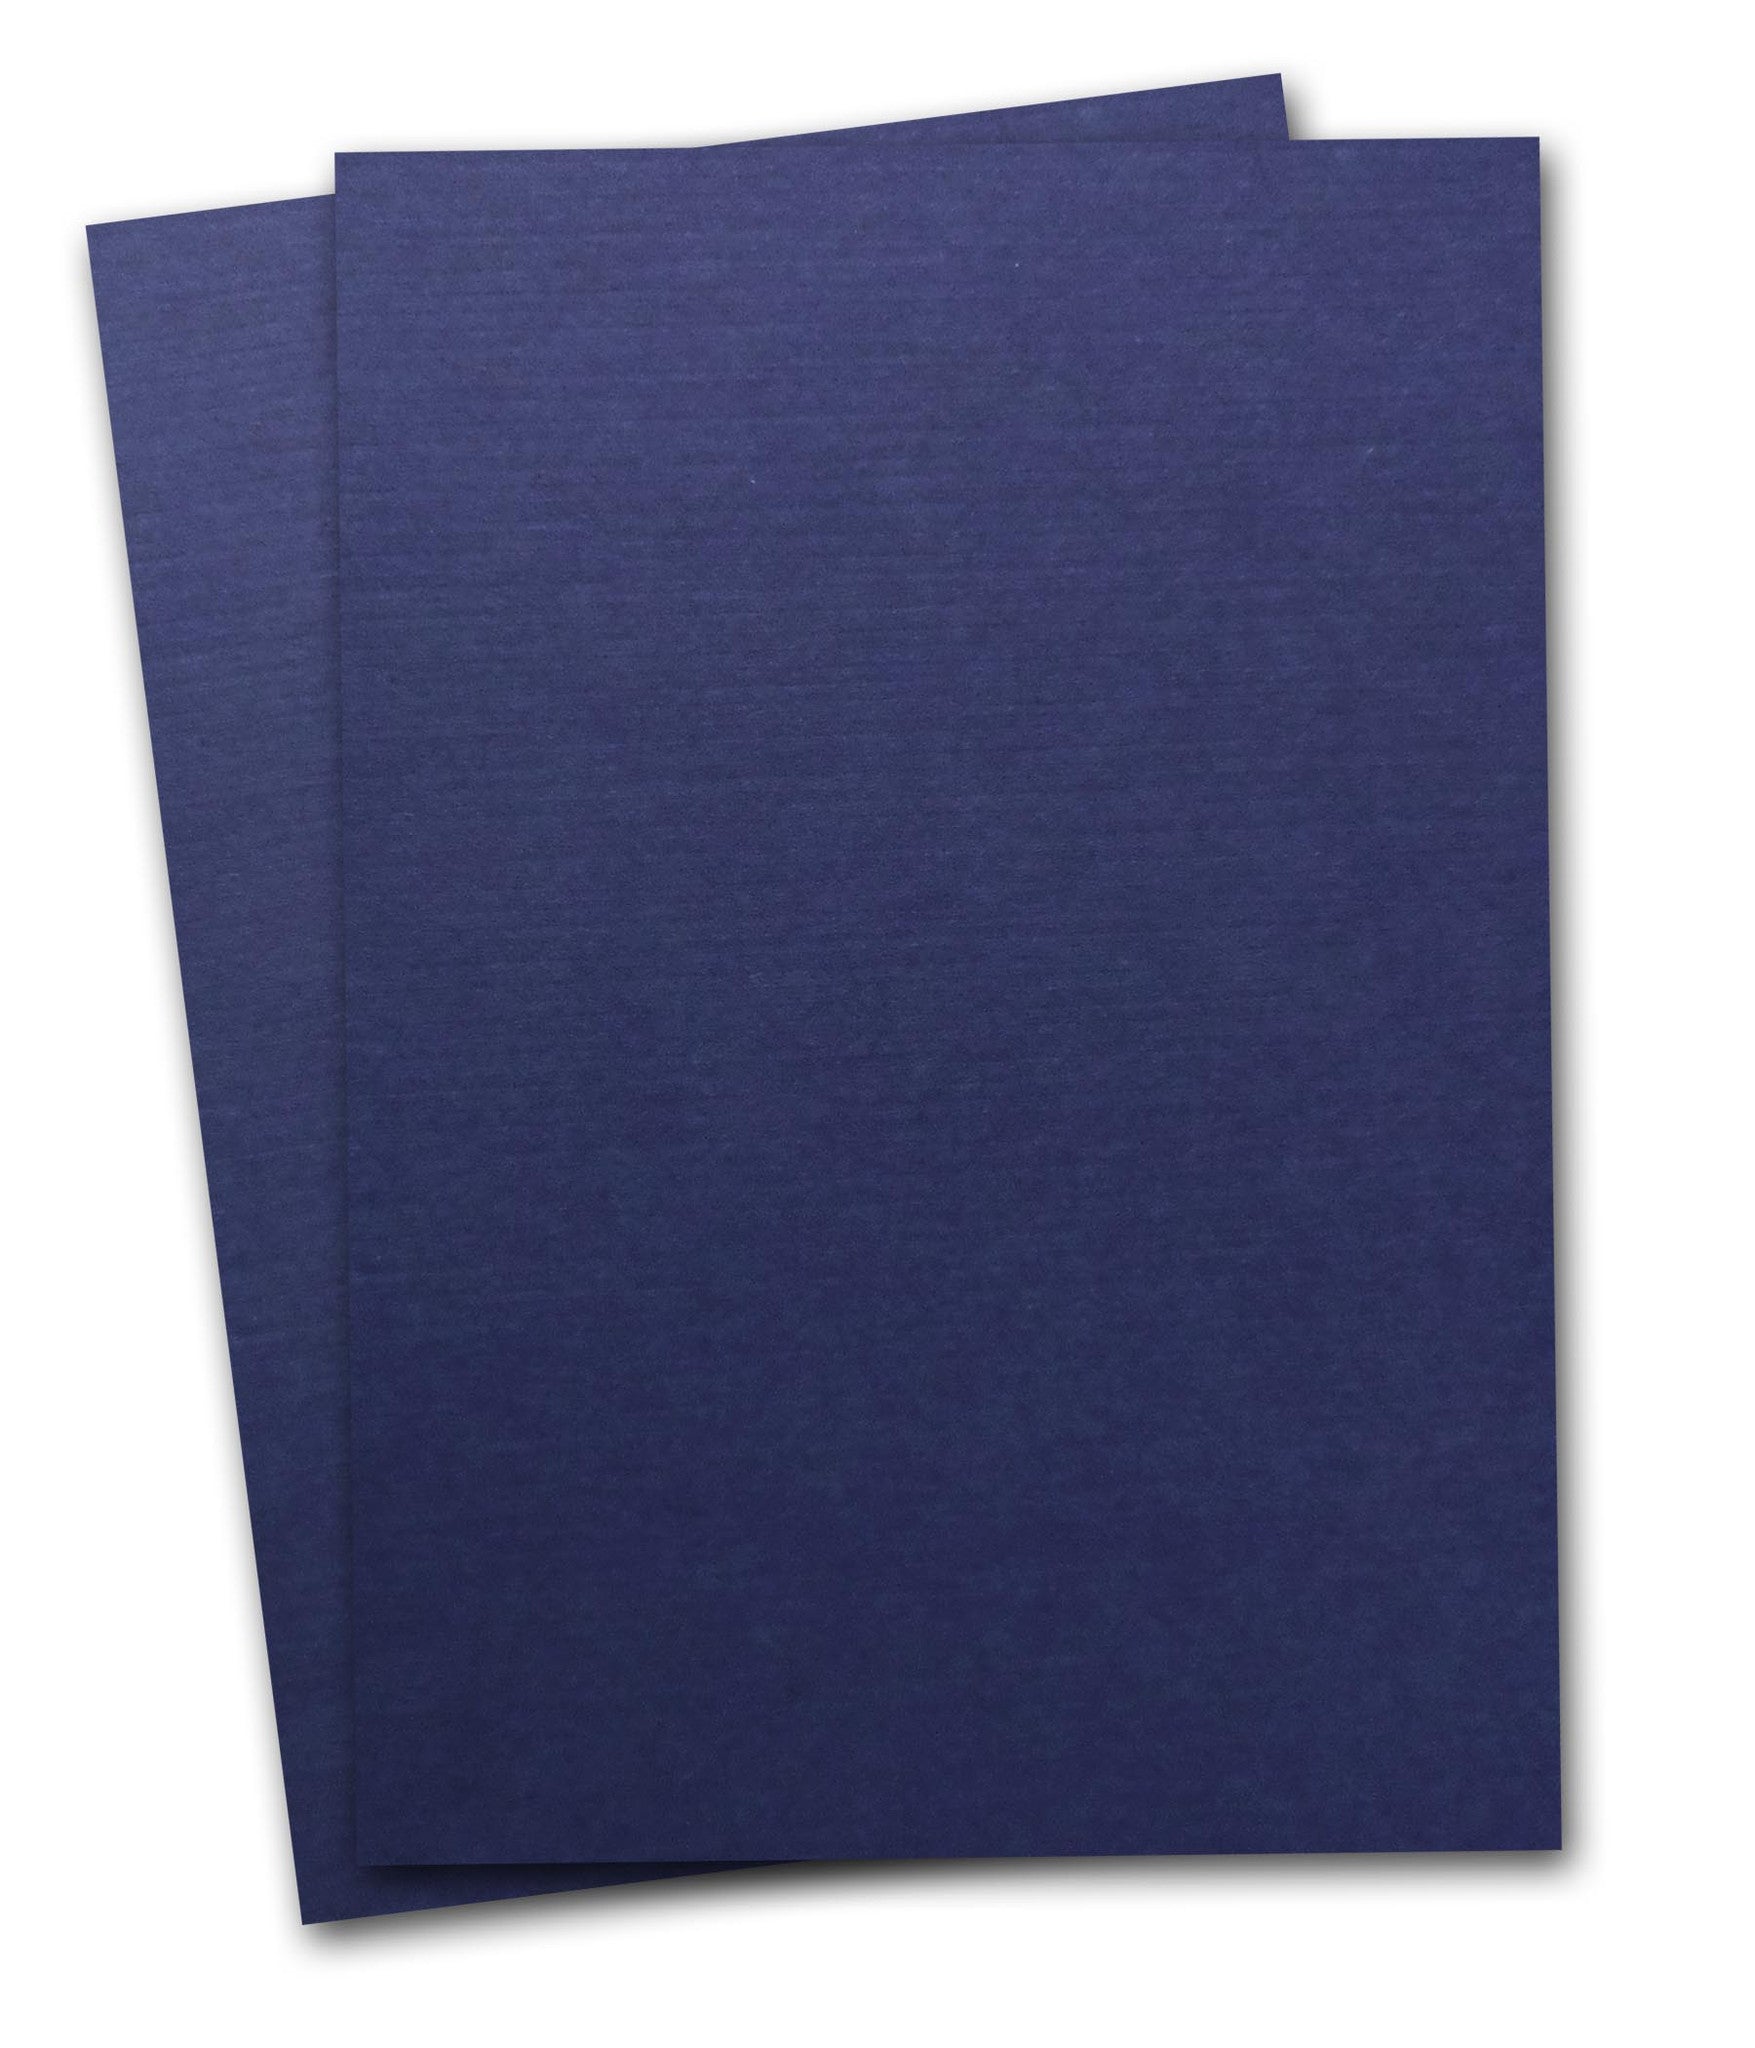 Haviland Blue Card Stock - 8 1/2 x 11 in 80 lb Cover Linen